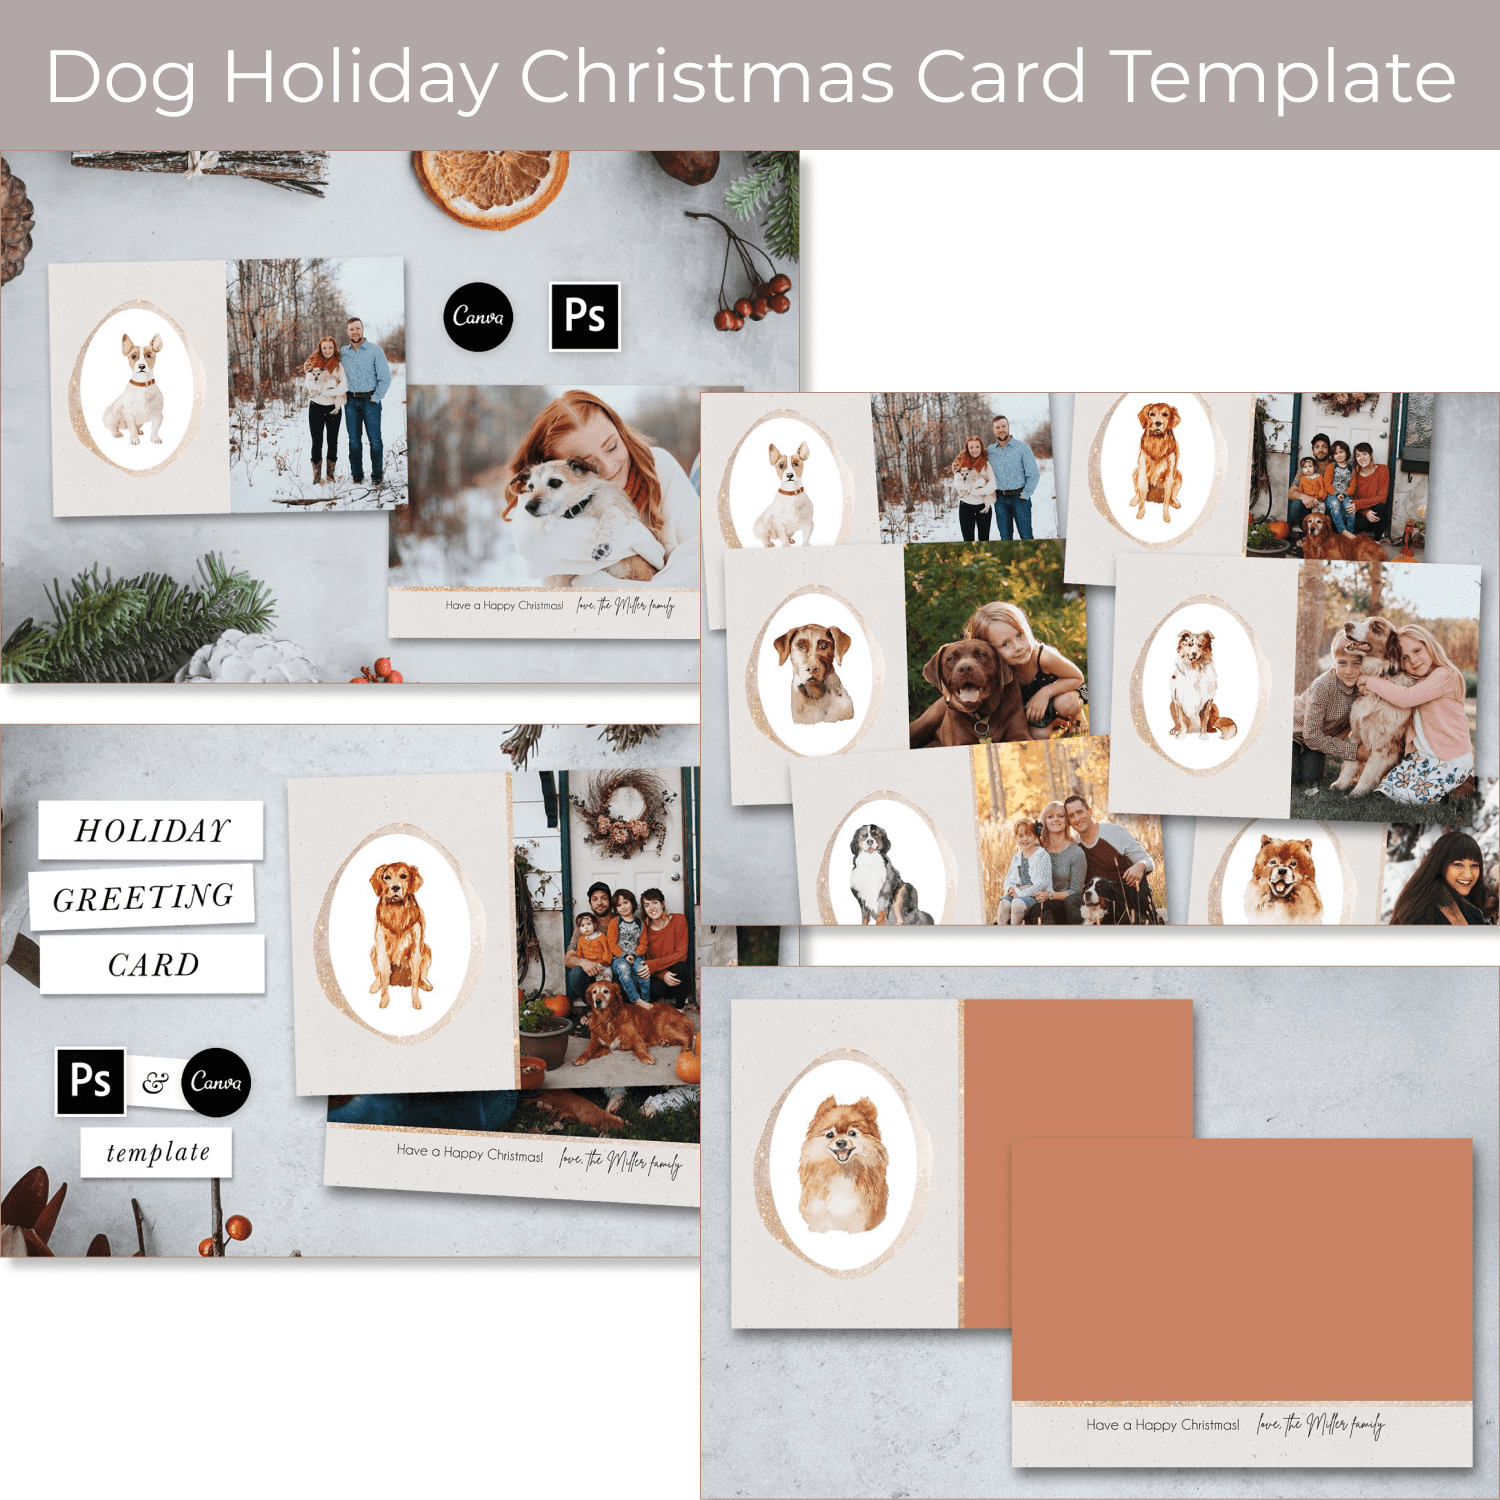 Dog Holiday Christmas Card Template main cover.